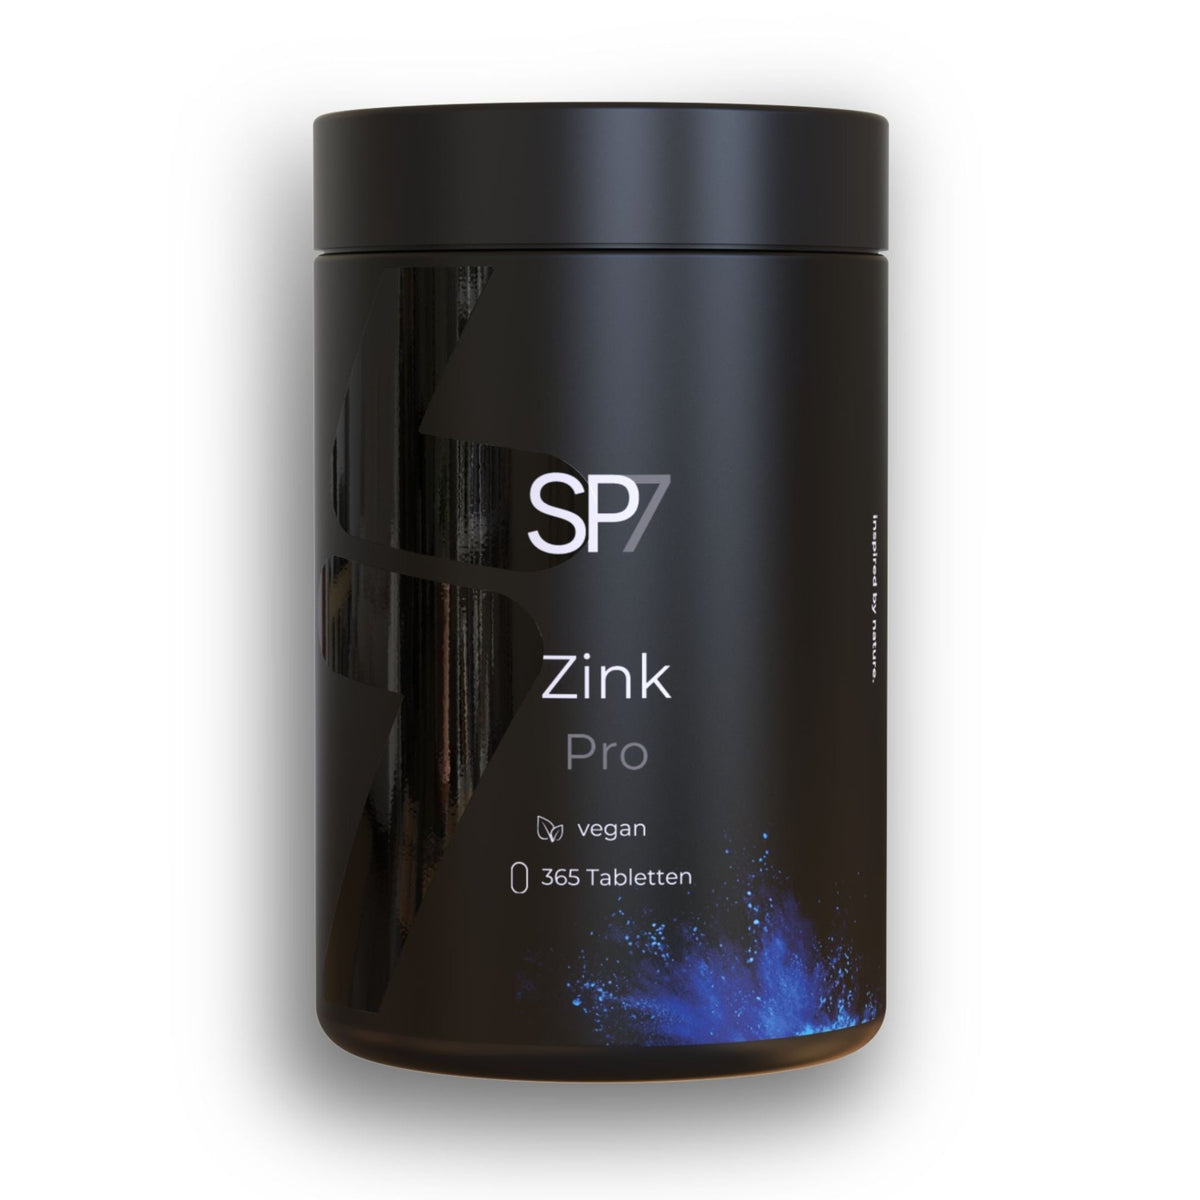 Zink Pro Tabletten - SP7 DE